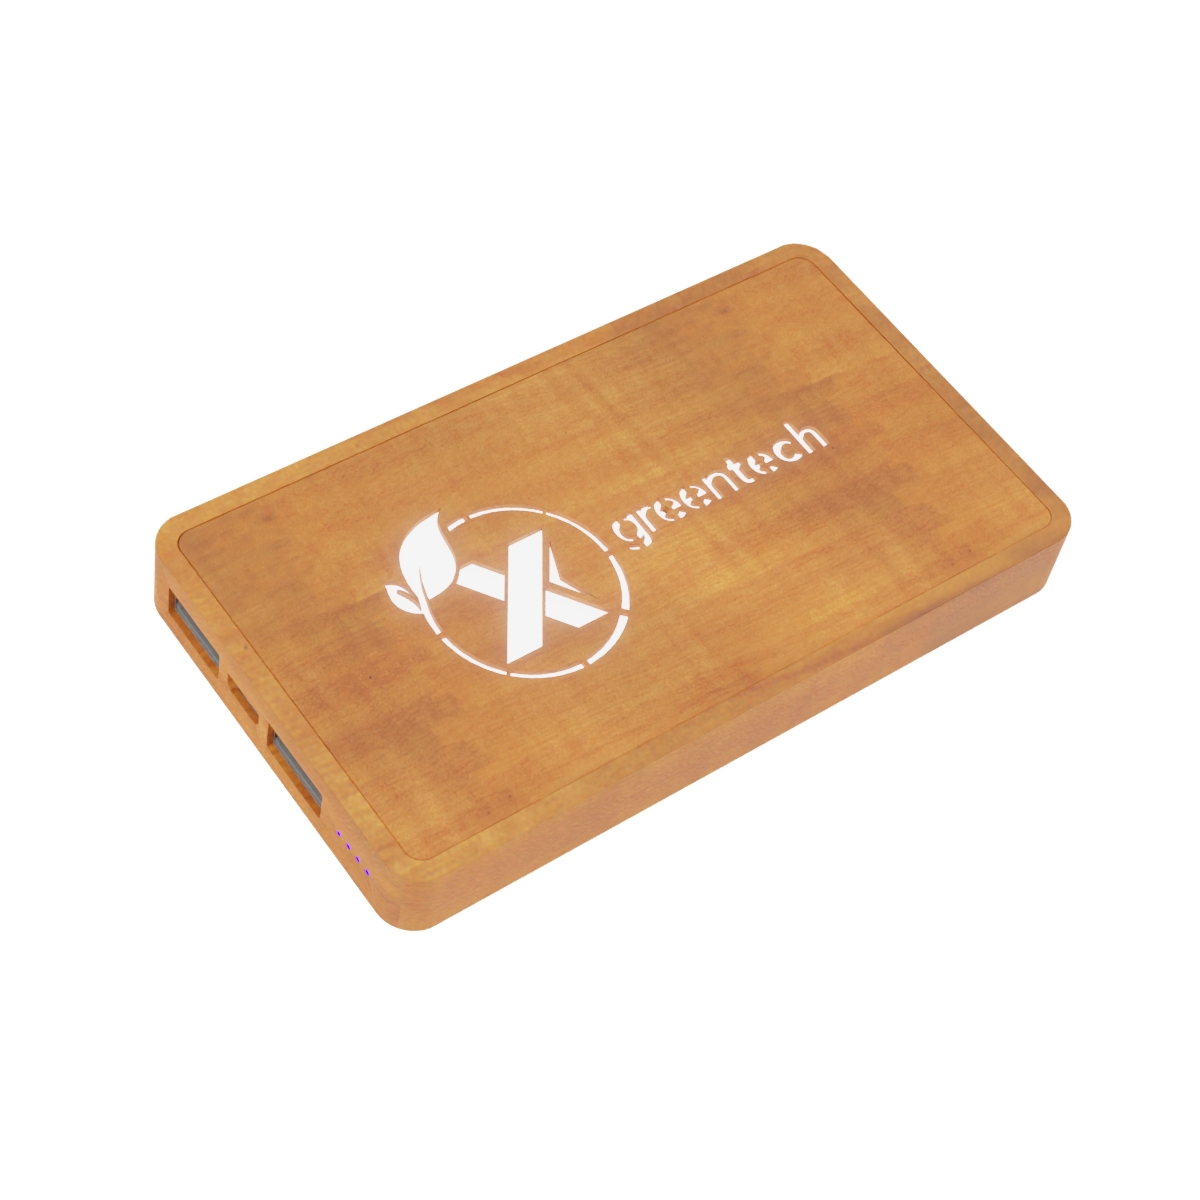 P38 - Powerbank 100% wood wireless